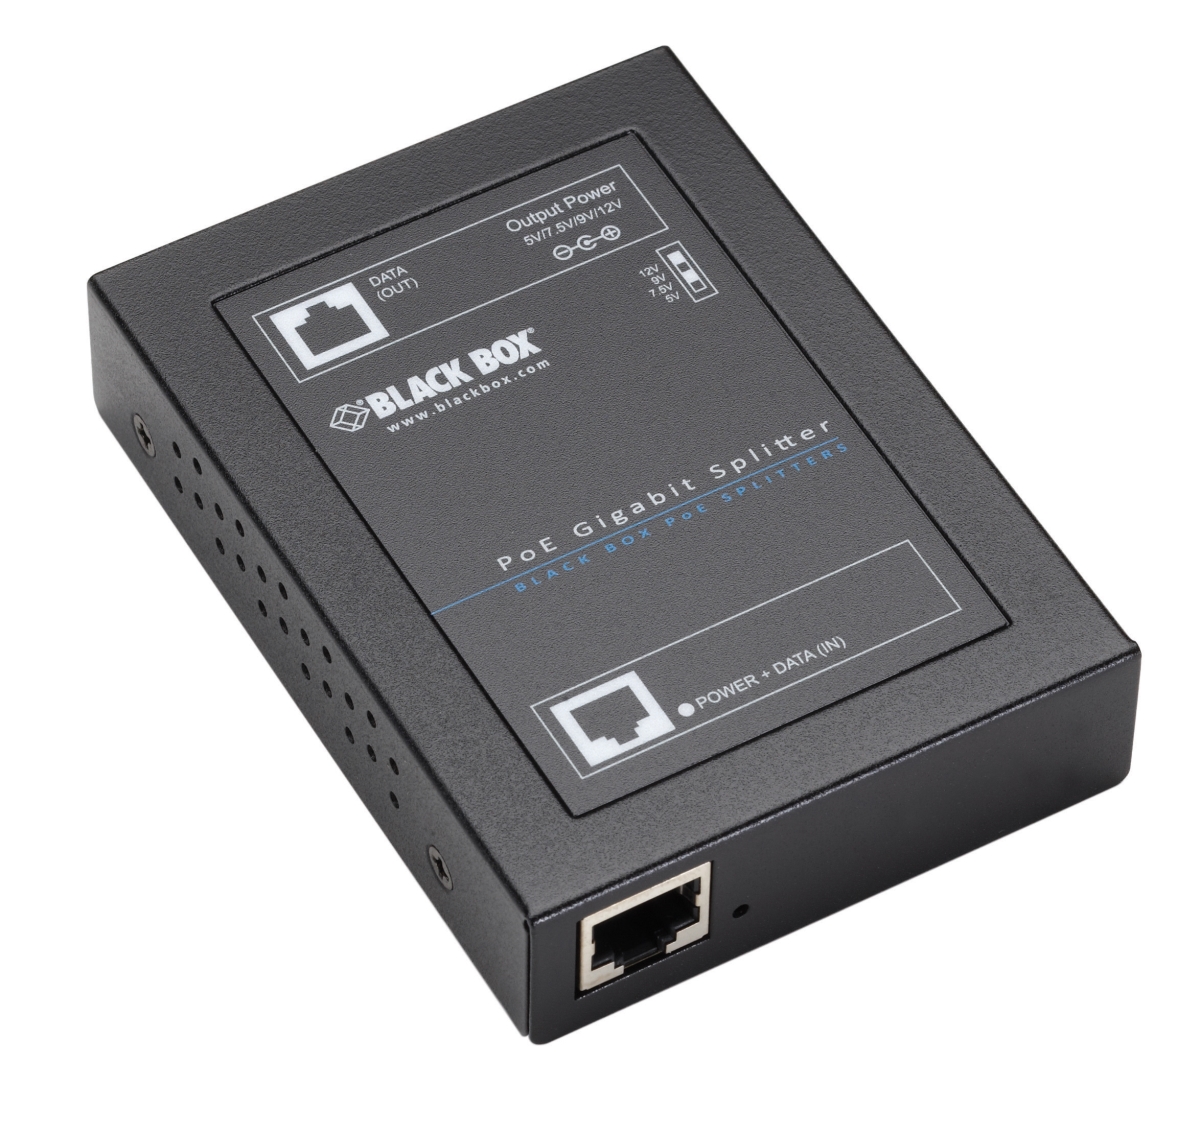 Picture of Black Box LPS2001 Gigabit POE Plus Splitter 802.3AT - 5&#44; 7.5&#44; 9 & 12V DC Out